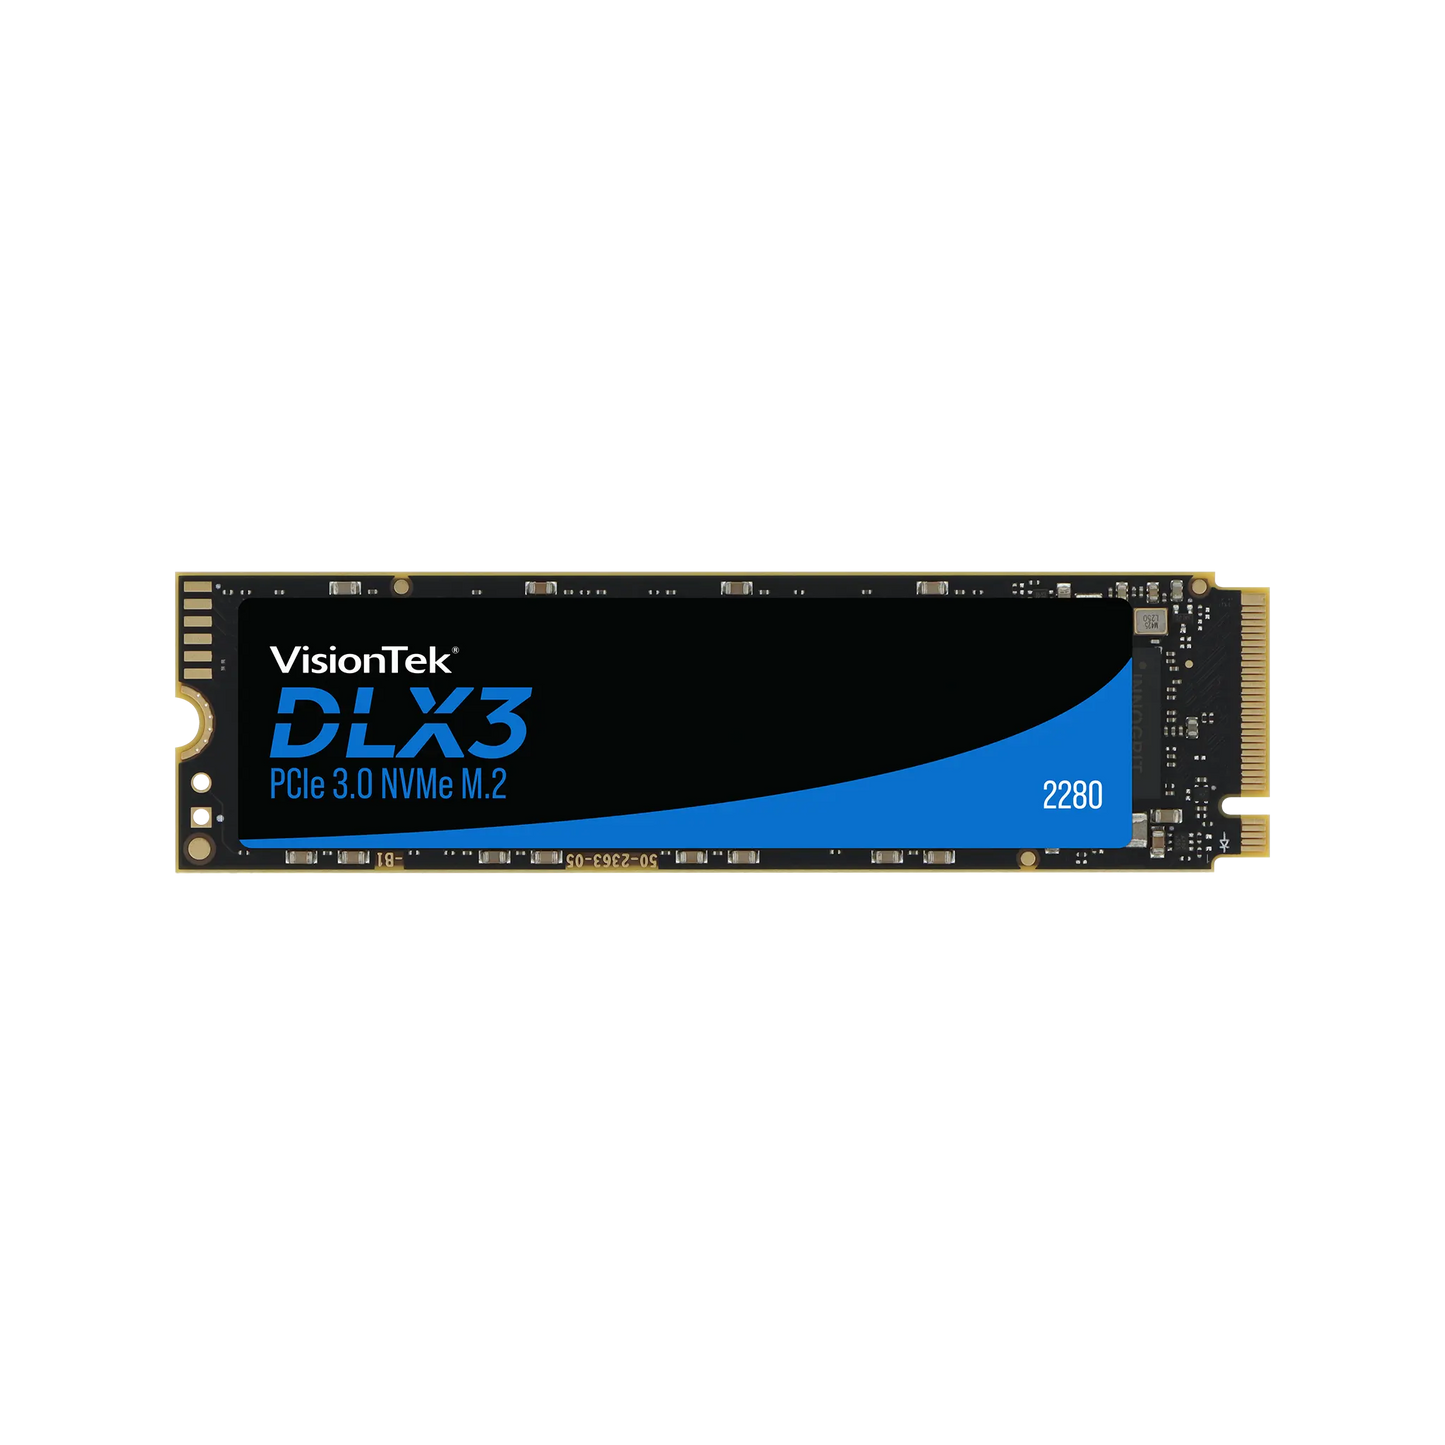 VisionTek DLX3 2280 M.2 PCIe 3.0 x4 SSD (NVMe)